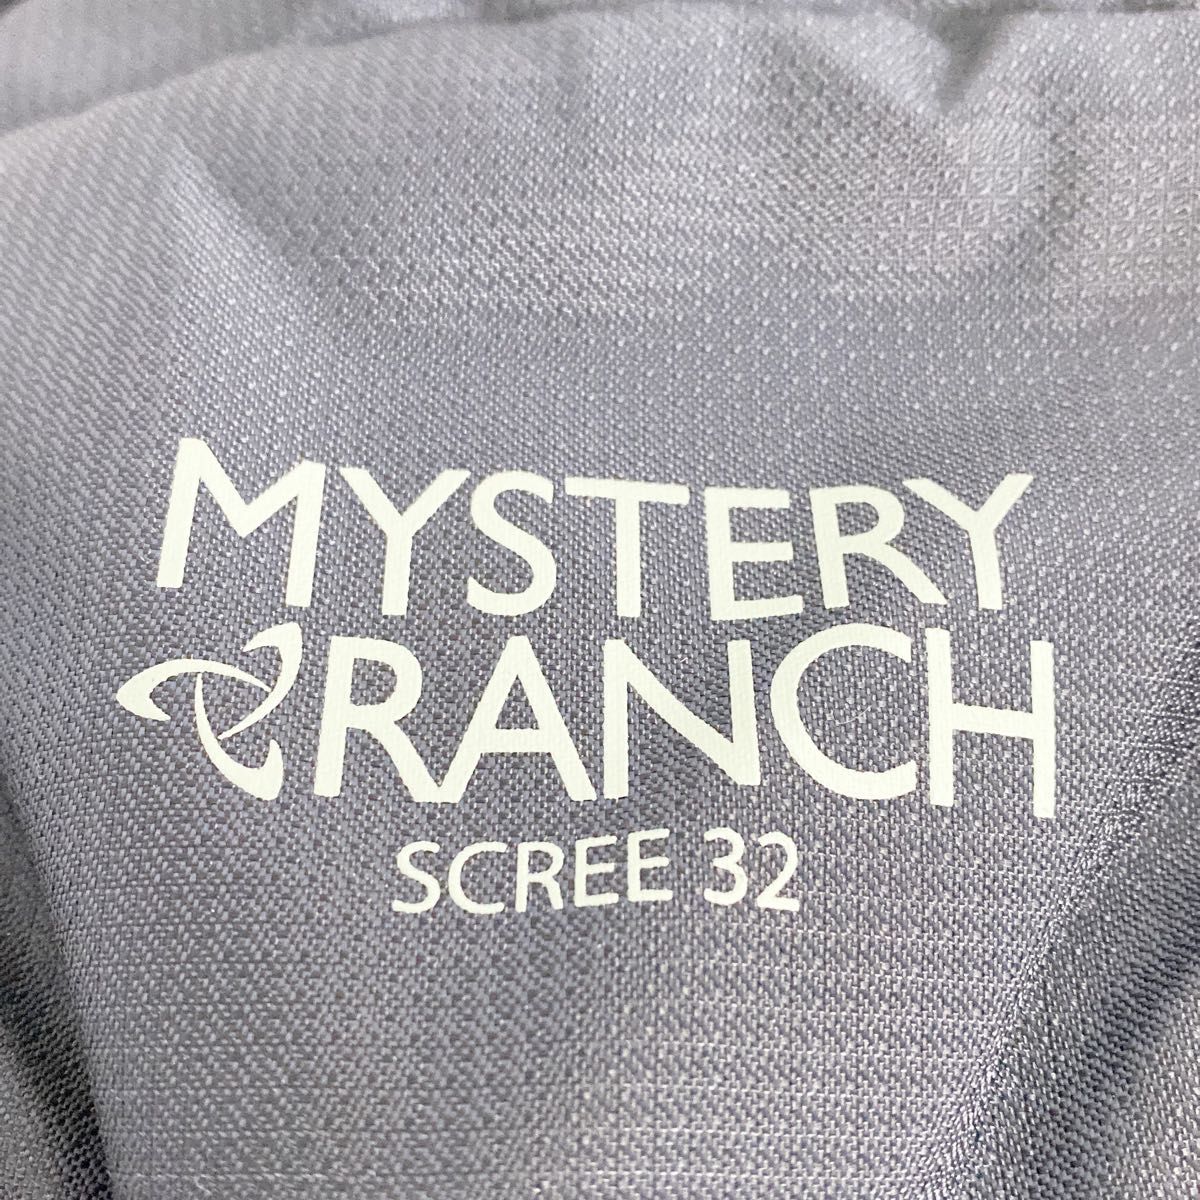 MYSTERY RANCH ミステリーランチ SCREE 32 バックパック